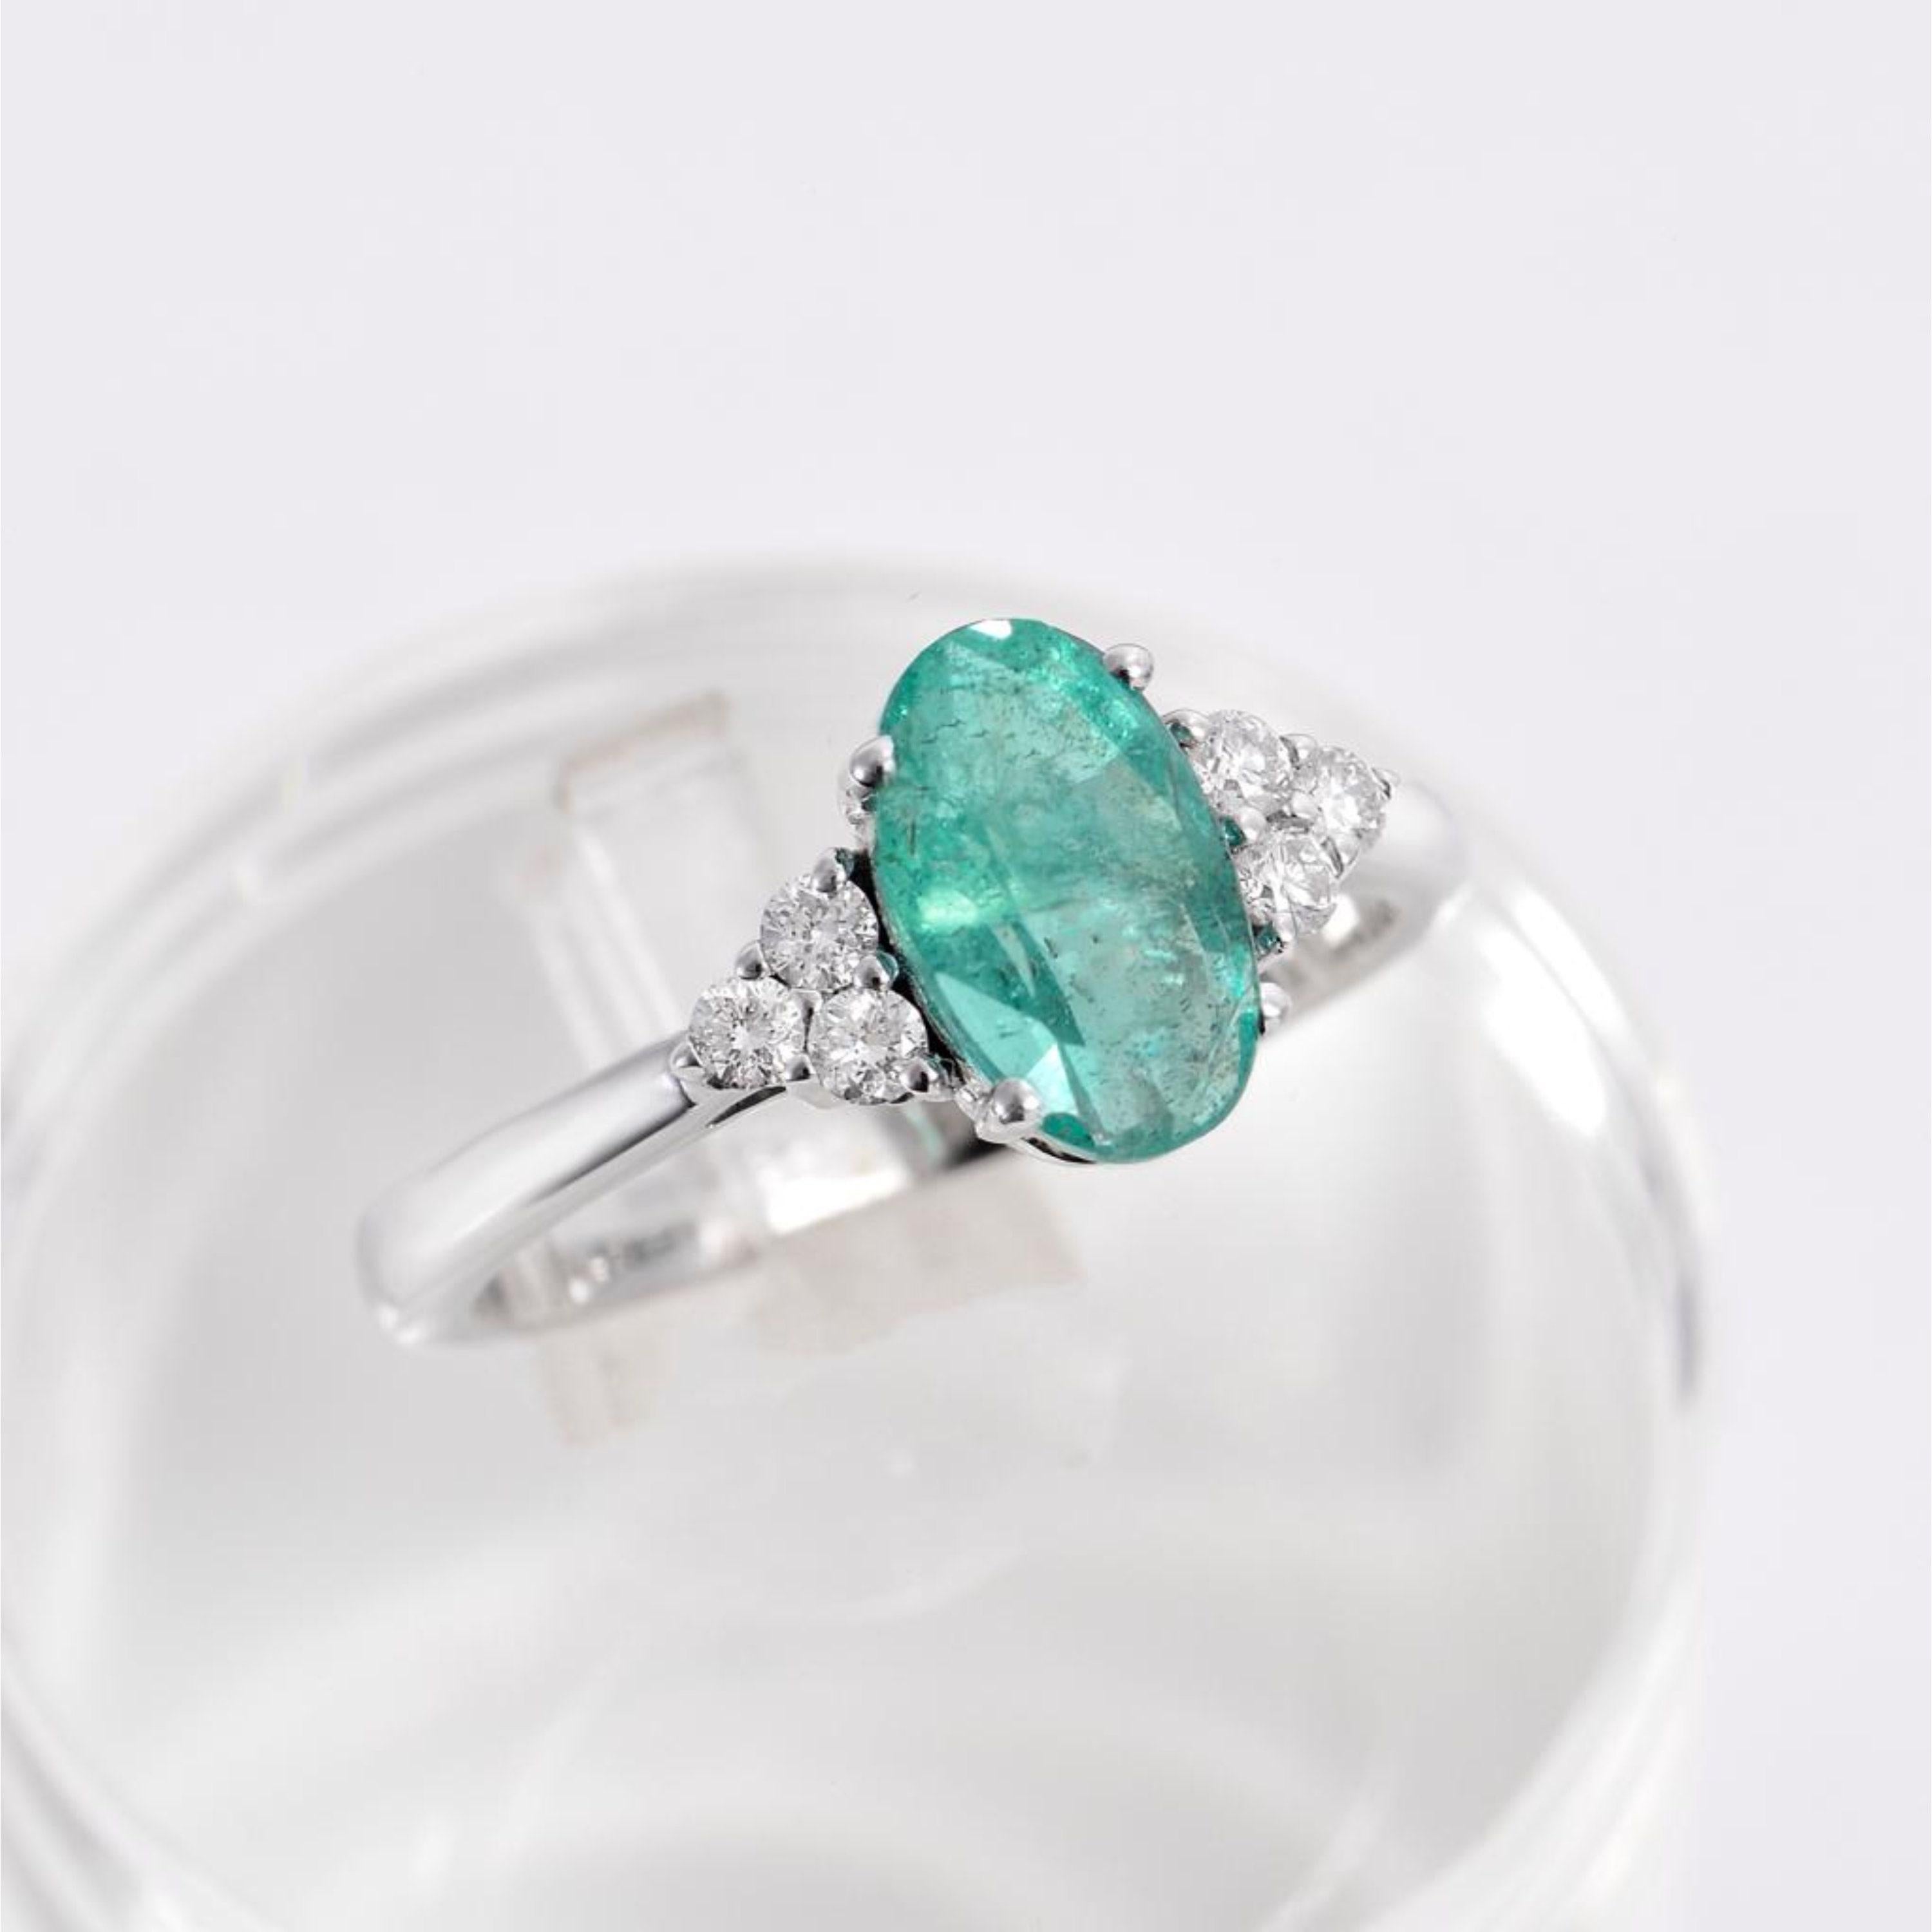 For Sale:  Antique White Gold 2 Carat Emerald Engagement Ring, Unique Diamond Wedding Ring 3